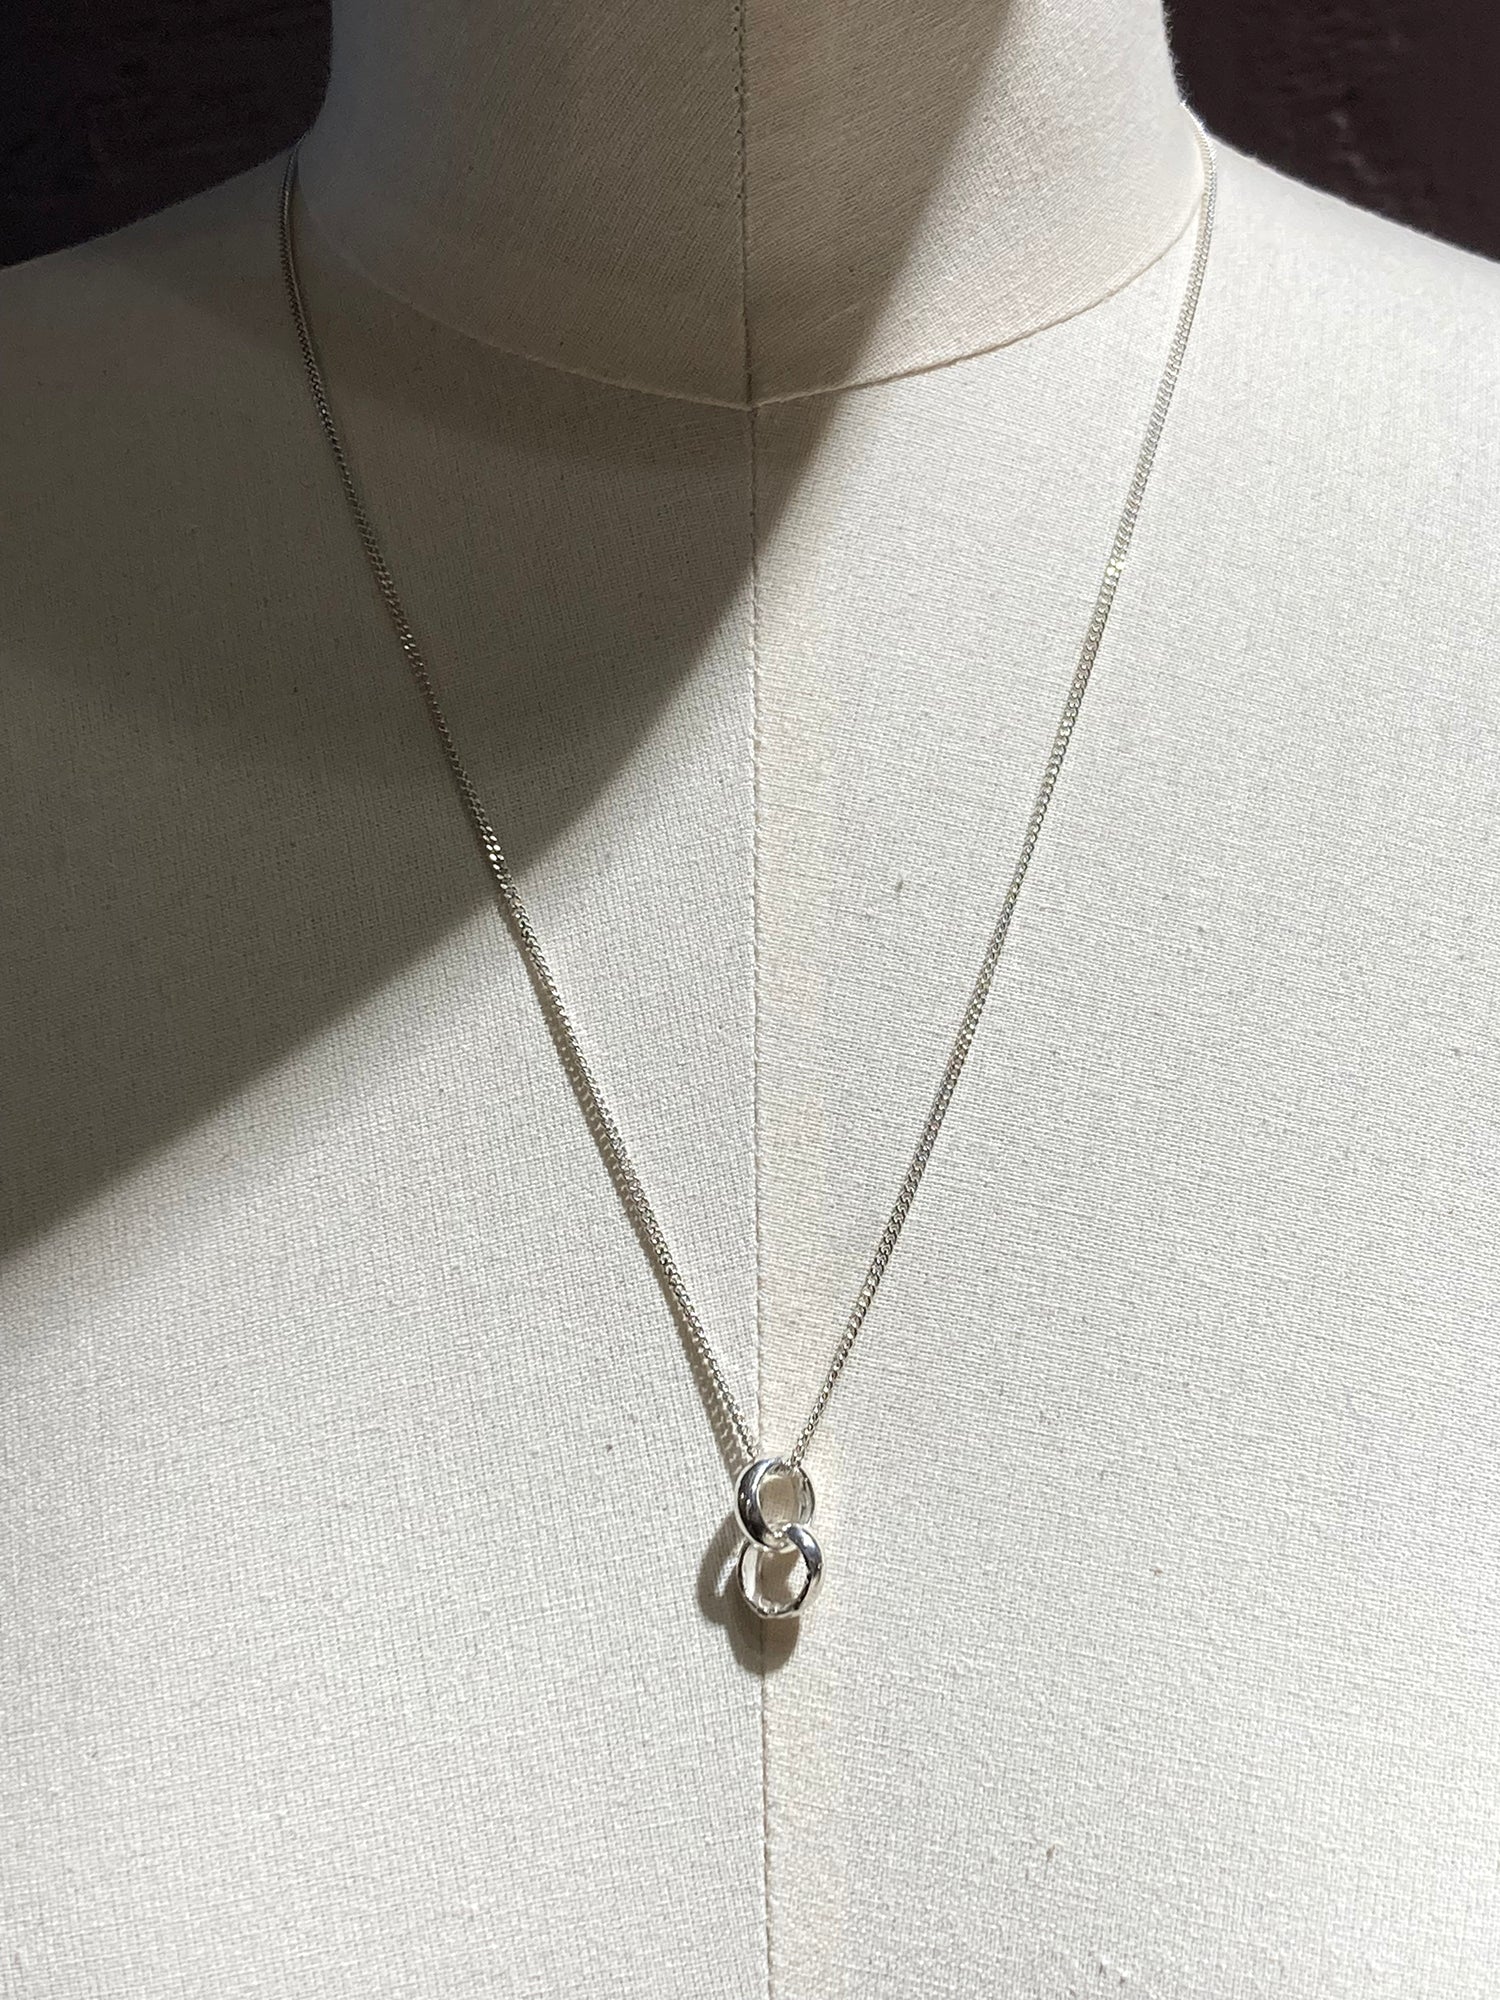 llayers-mens-women-jewelry-silver-pendant-Infinity-newyork-brooklyn-W3